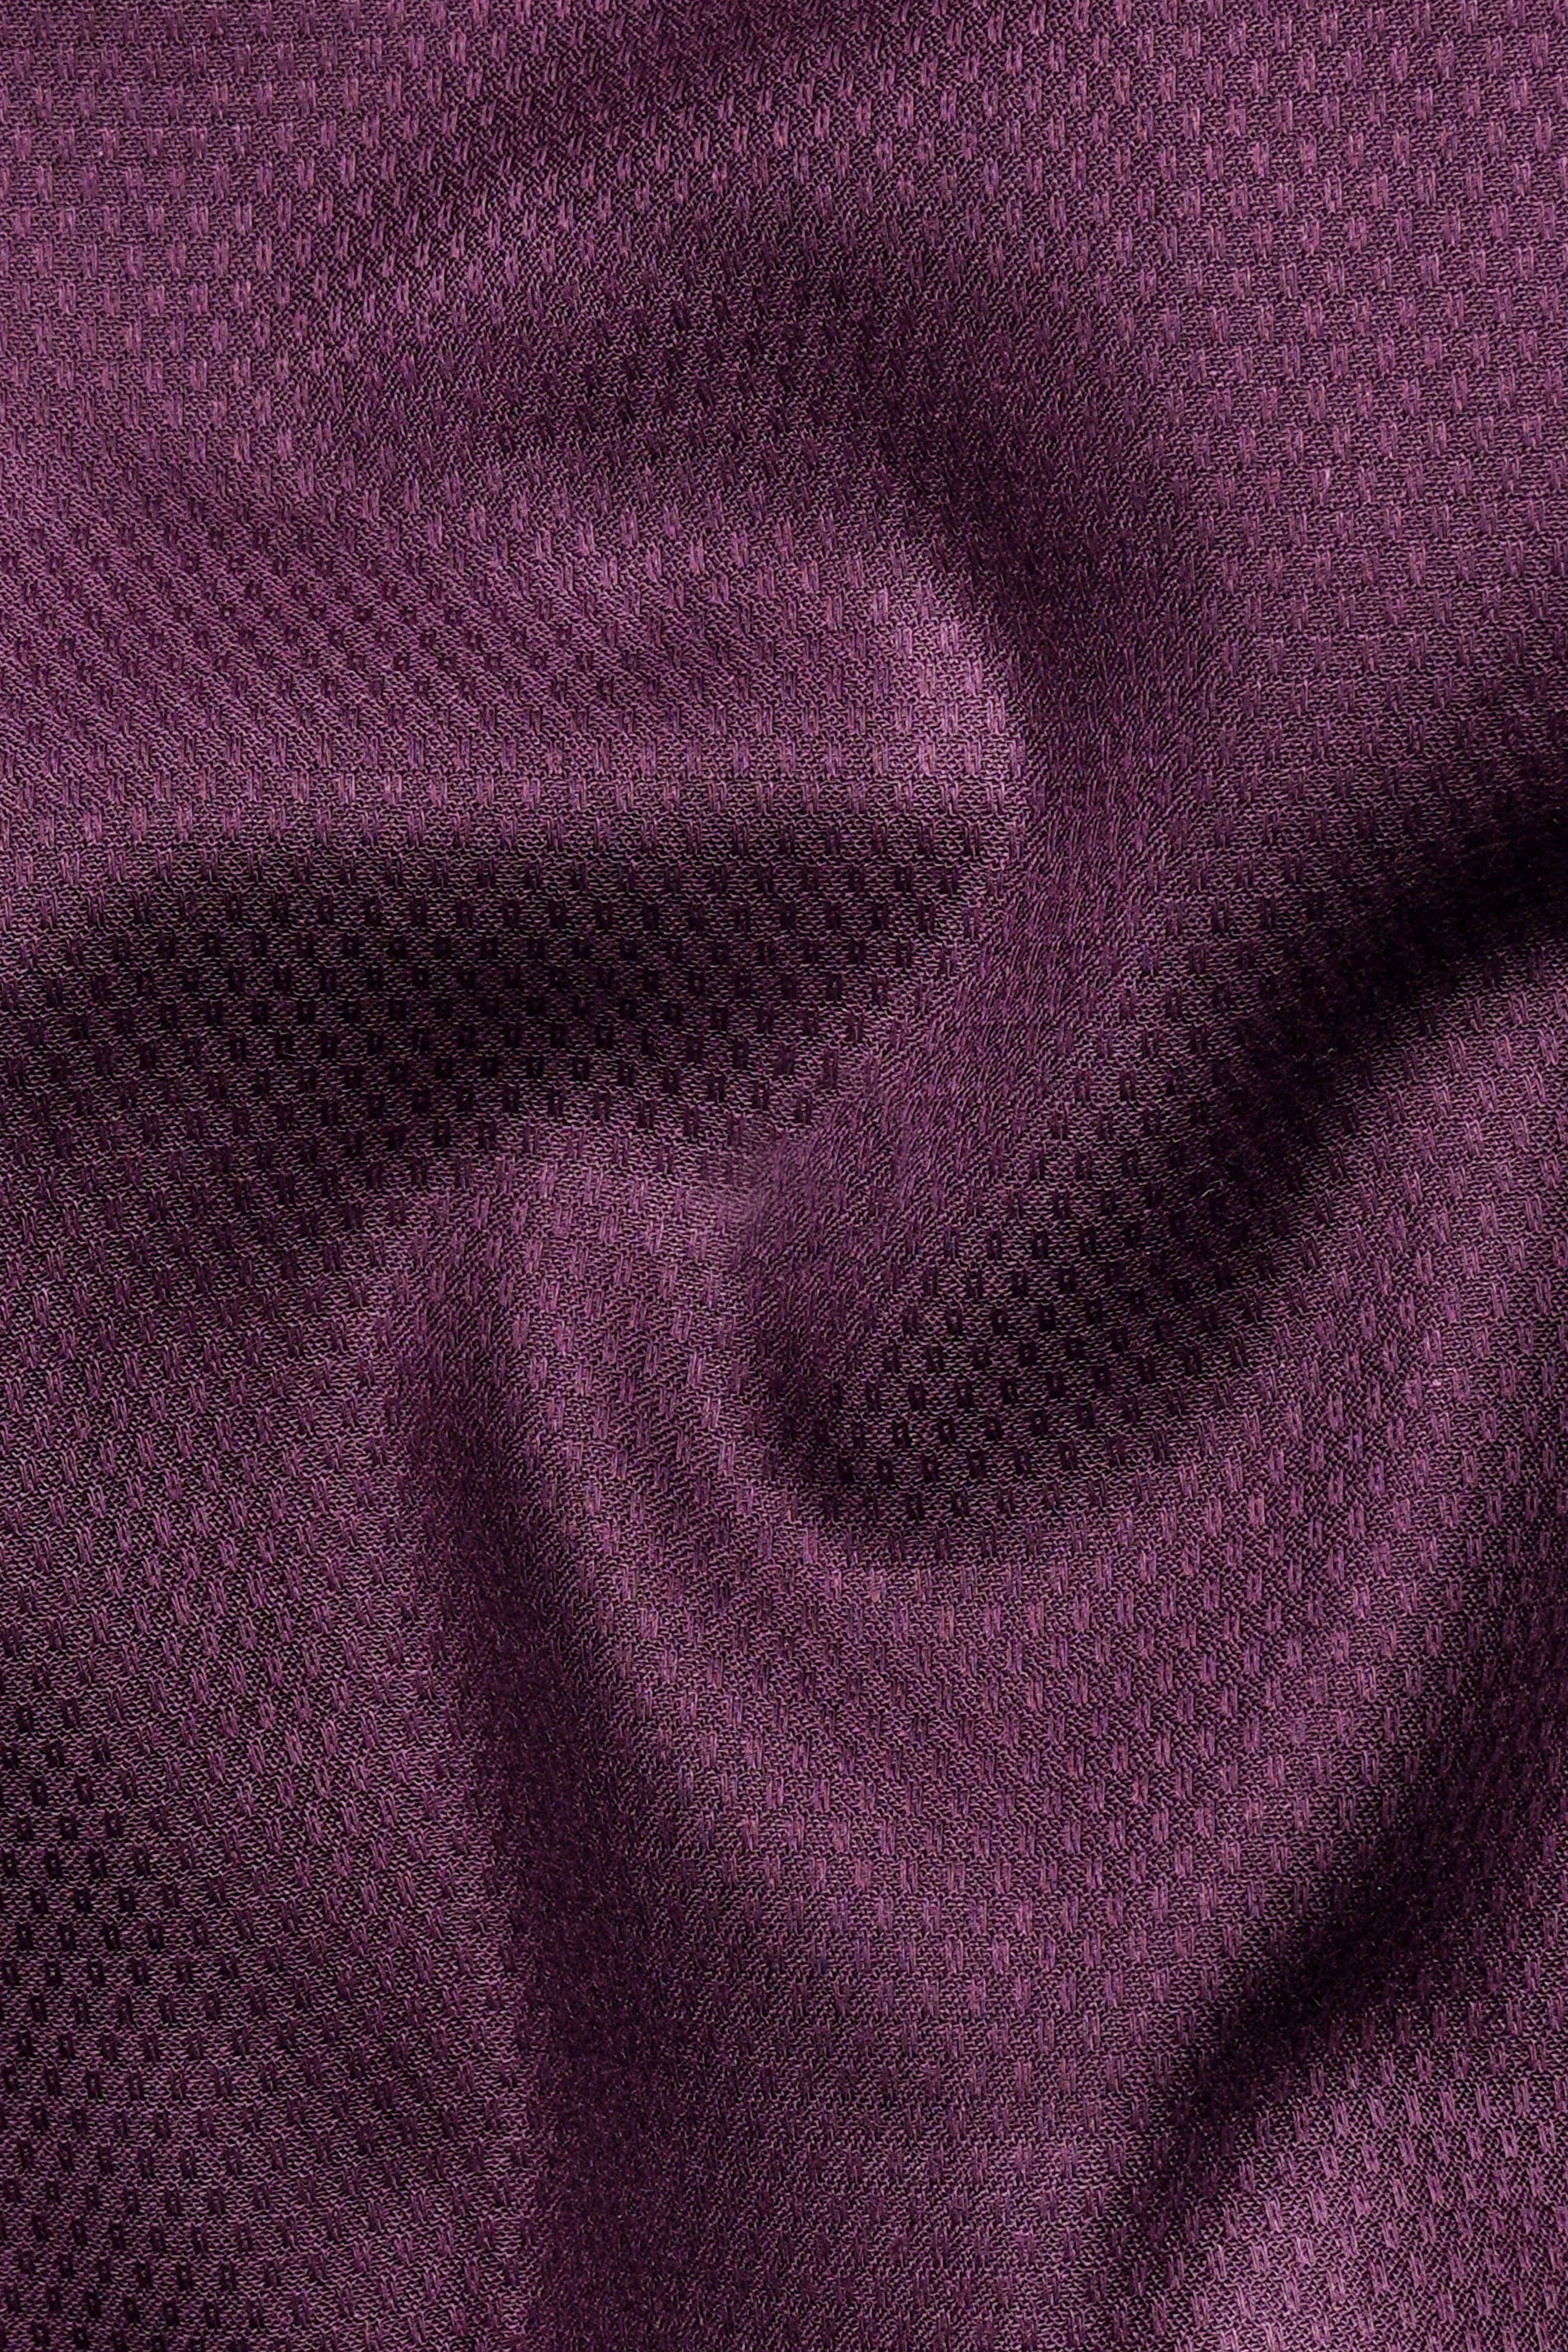 Plum Purple Embroidered Dobby Textured Premium Giza Cotton Designer Shirt 8729-CA-E215-38, 8729-CA-E215-H-38, 8729-CA-E215-39, 8729-CA-E215-H-39, 8729-CA-E215-40, 8729-CA-E215-H-40, 8729-CA-E215-42, 8729-CA-E215-H-42, 8729-CA-E215-44, 8729-CA-E215-H-44, 8729-CA-E215-46, 8729-CA-E215-H-46, 8729-CA-E215-48, 8729-CA-E215-H-48, 8729-CA-E215-50, 8729-CA-E215-H-50, 8729-CA-E215-52, 8729-CA-E215-H-52